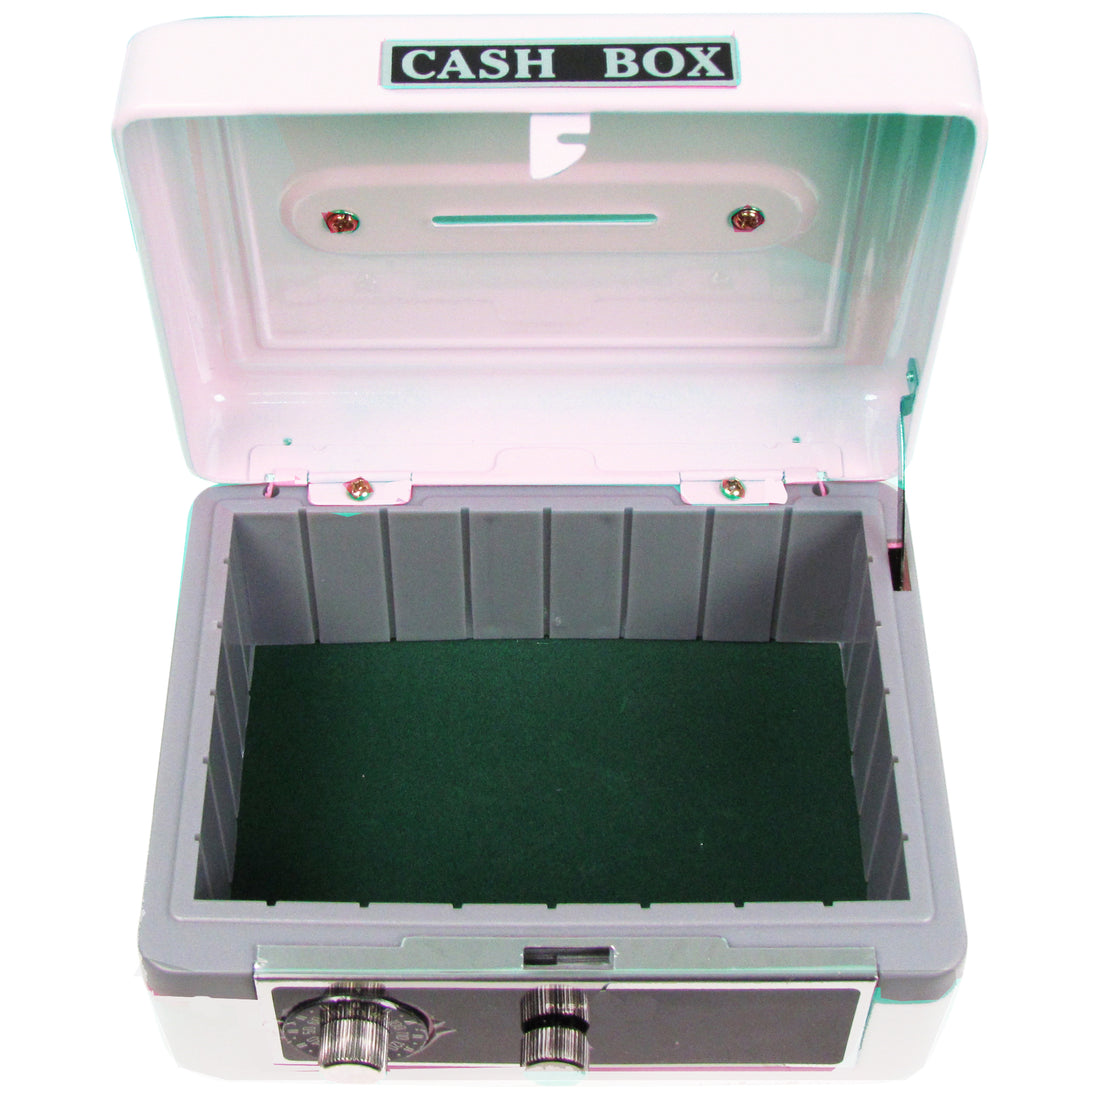 Personalized White Cash Box with Mermaid Princess design